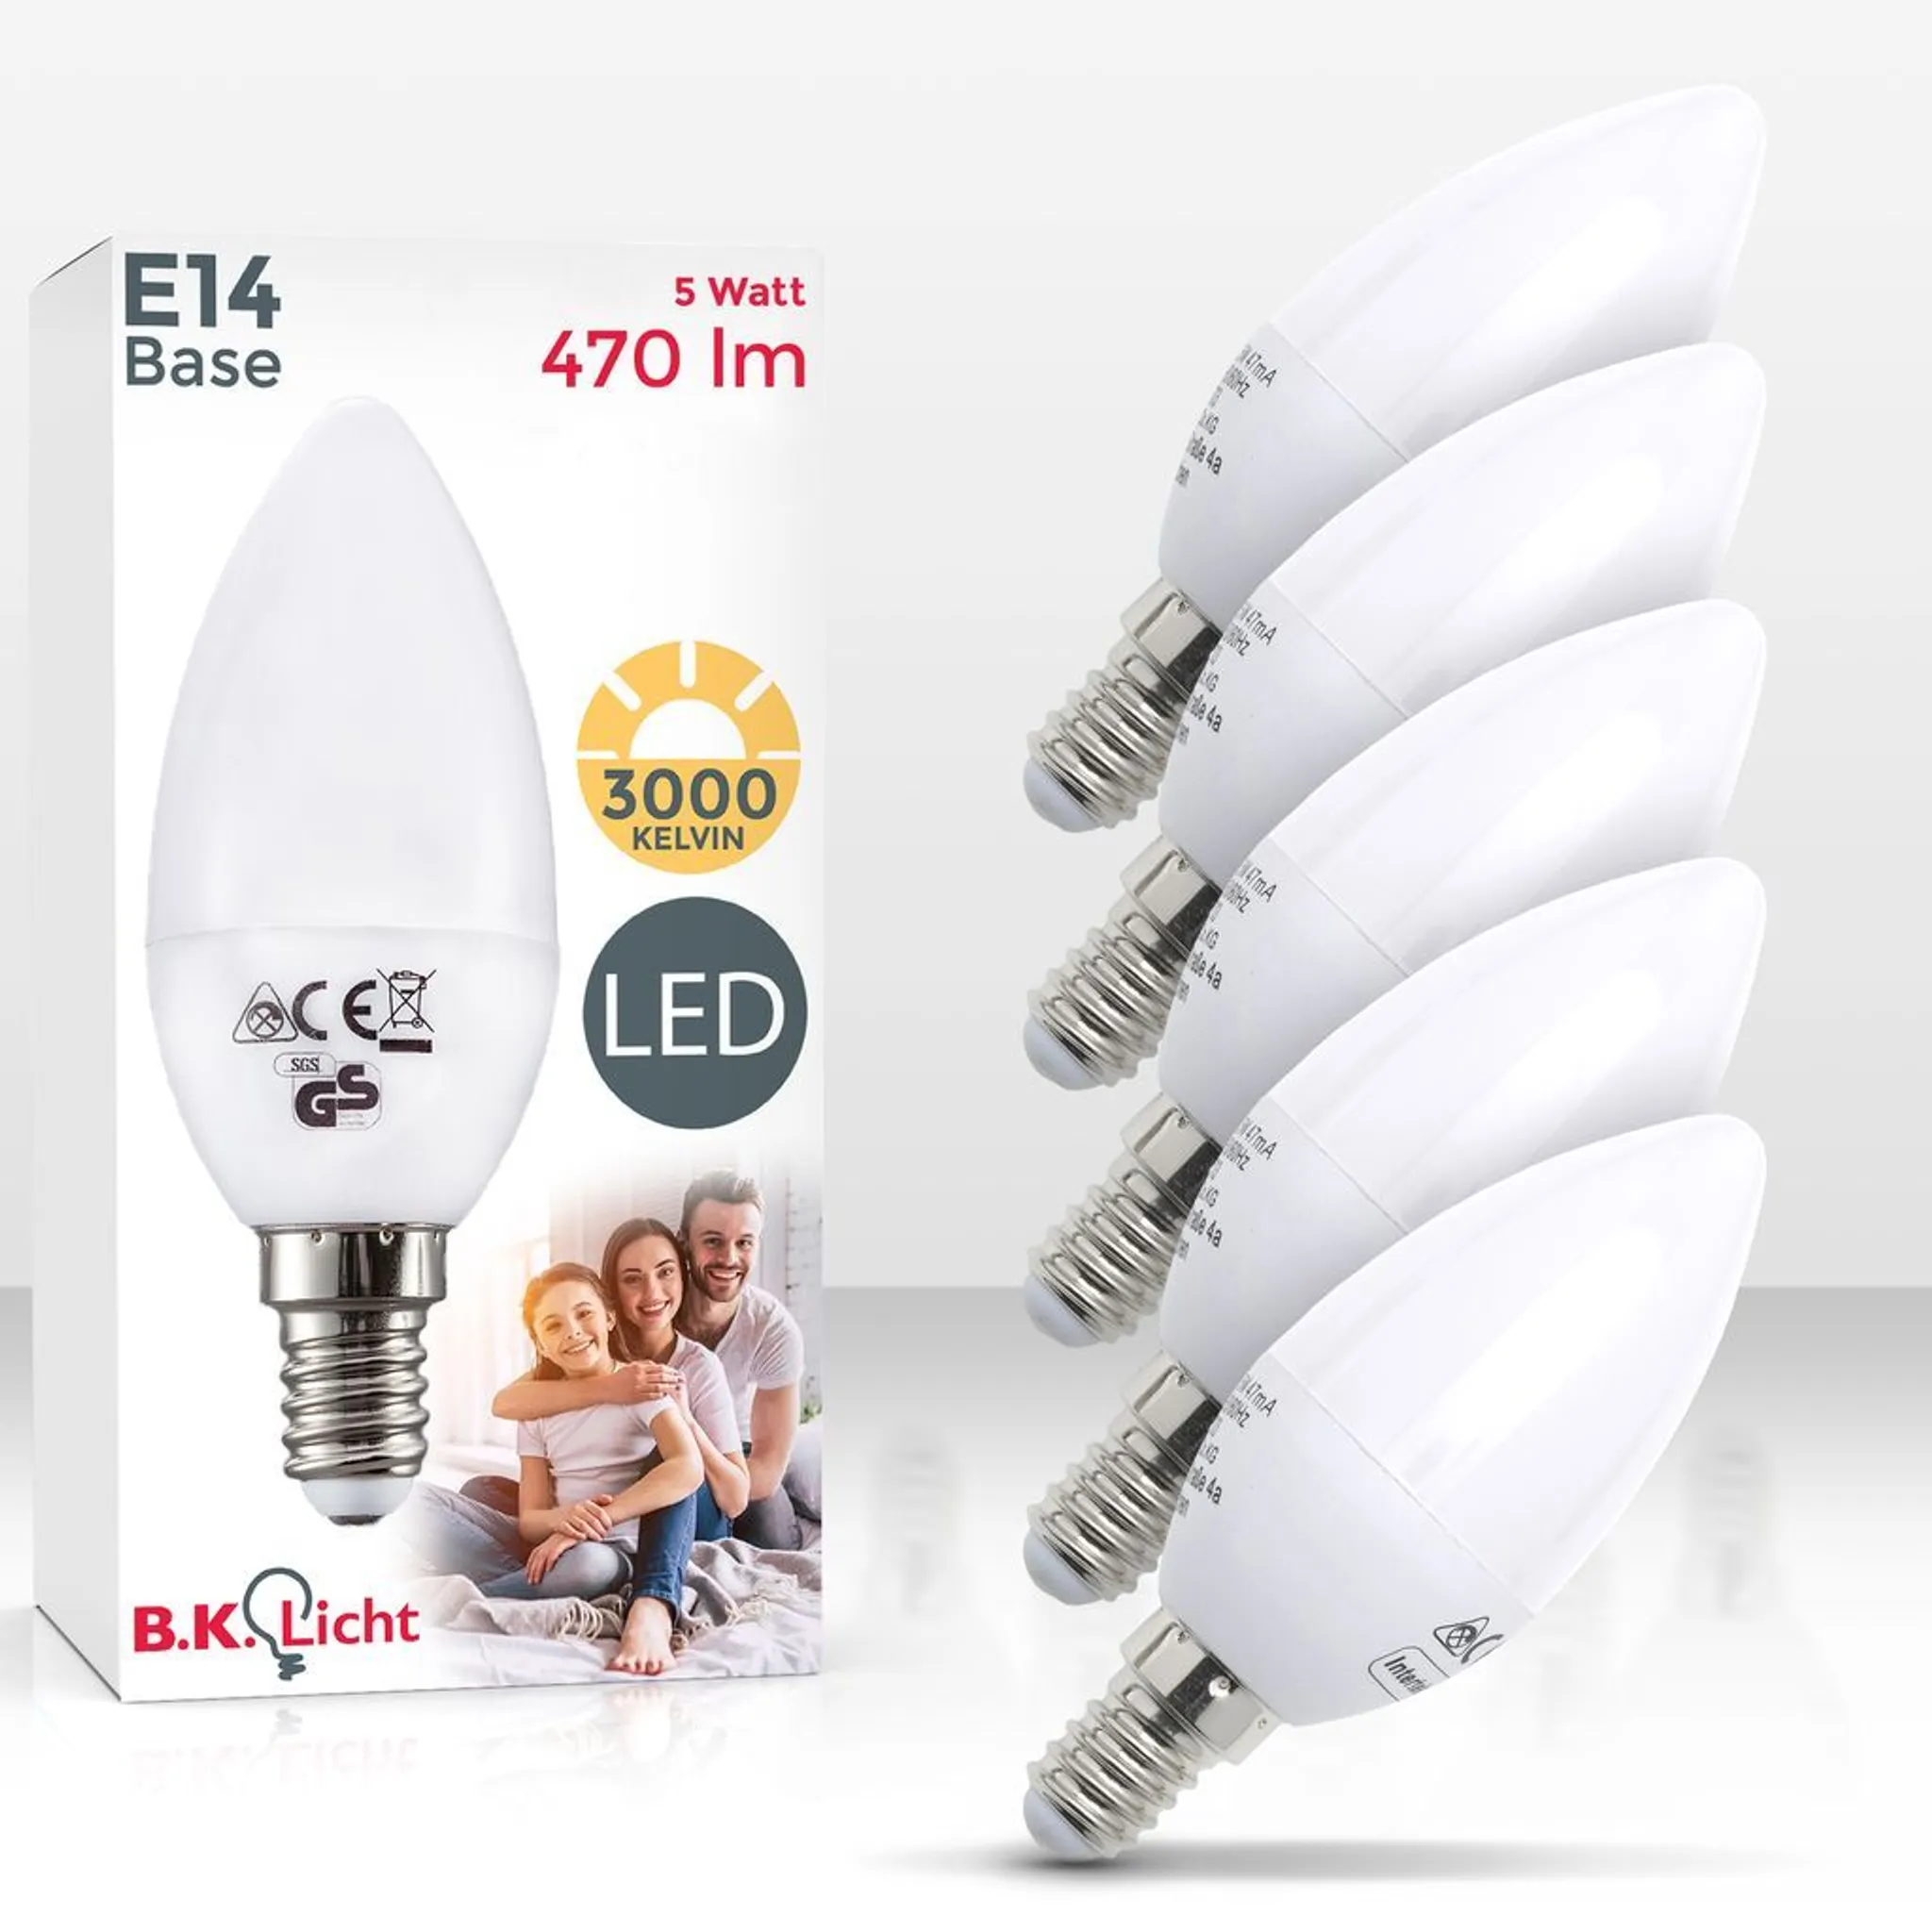 LED Leuchtmittel E14 Energiespar-Lampe 5 Watt